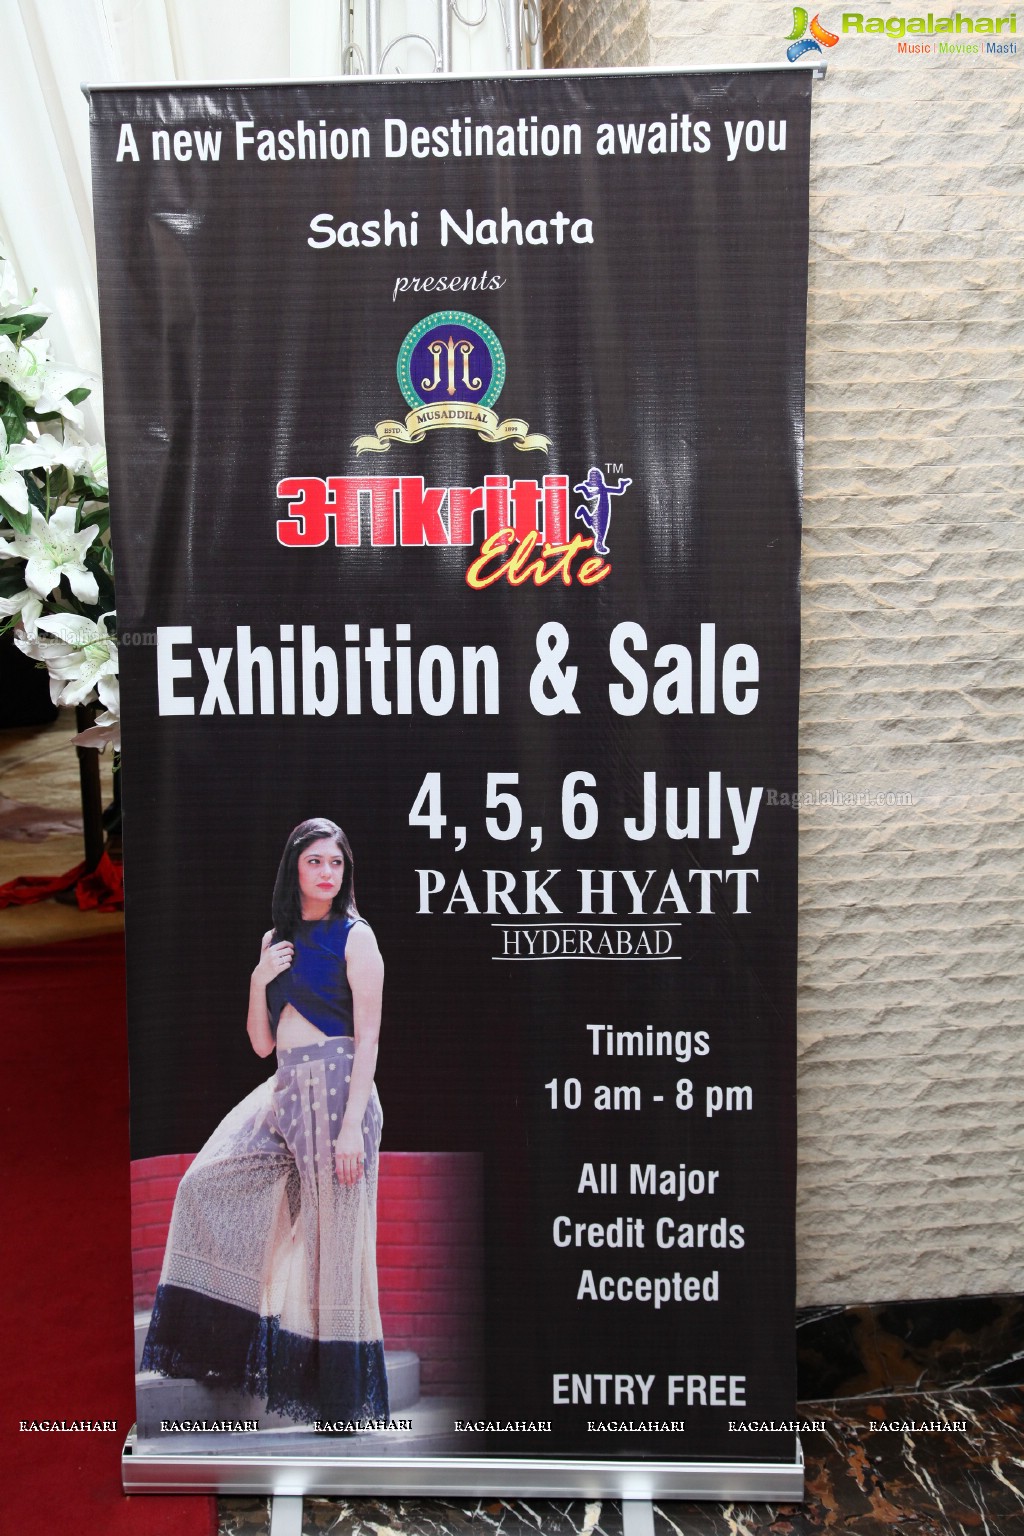 Akriti Elite Exhibition and Sale July 2017 at Park Hyatt, Hyderabad